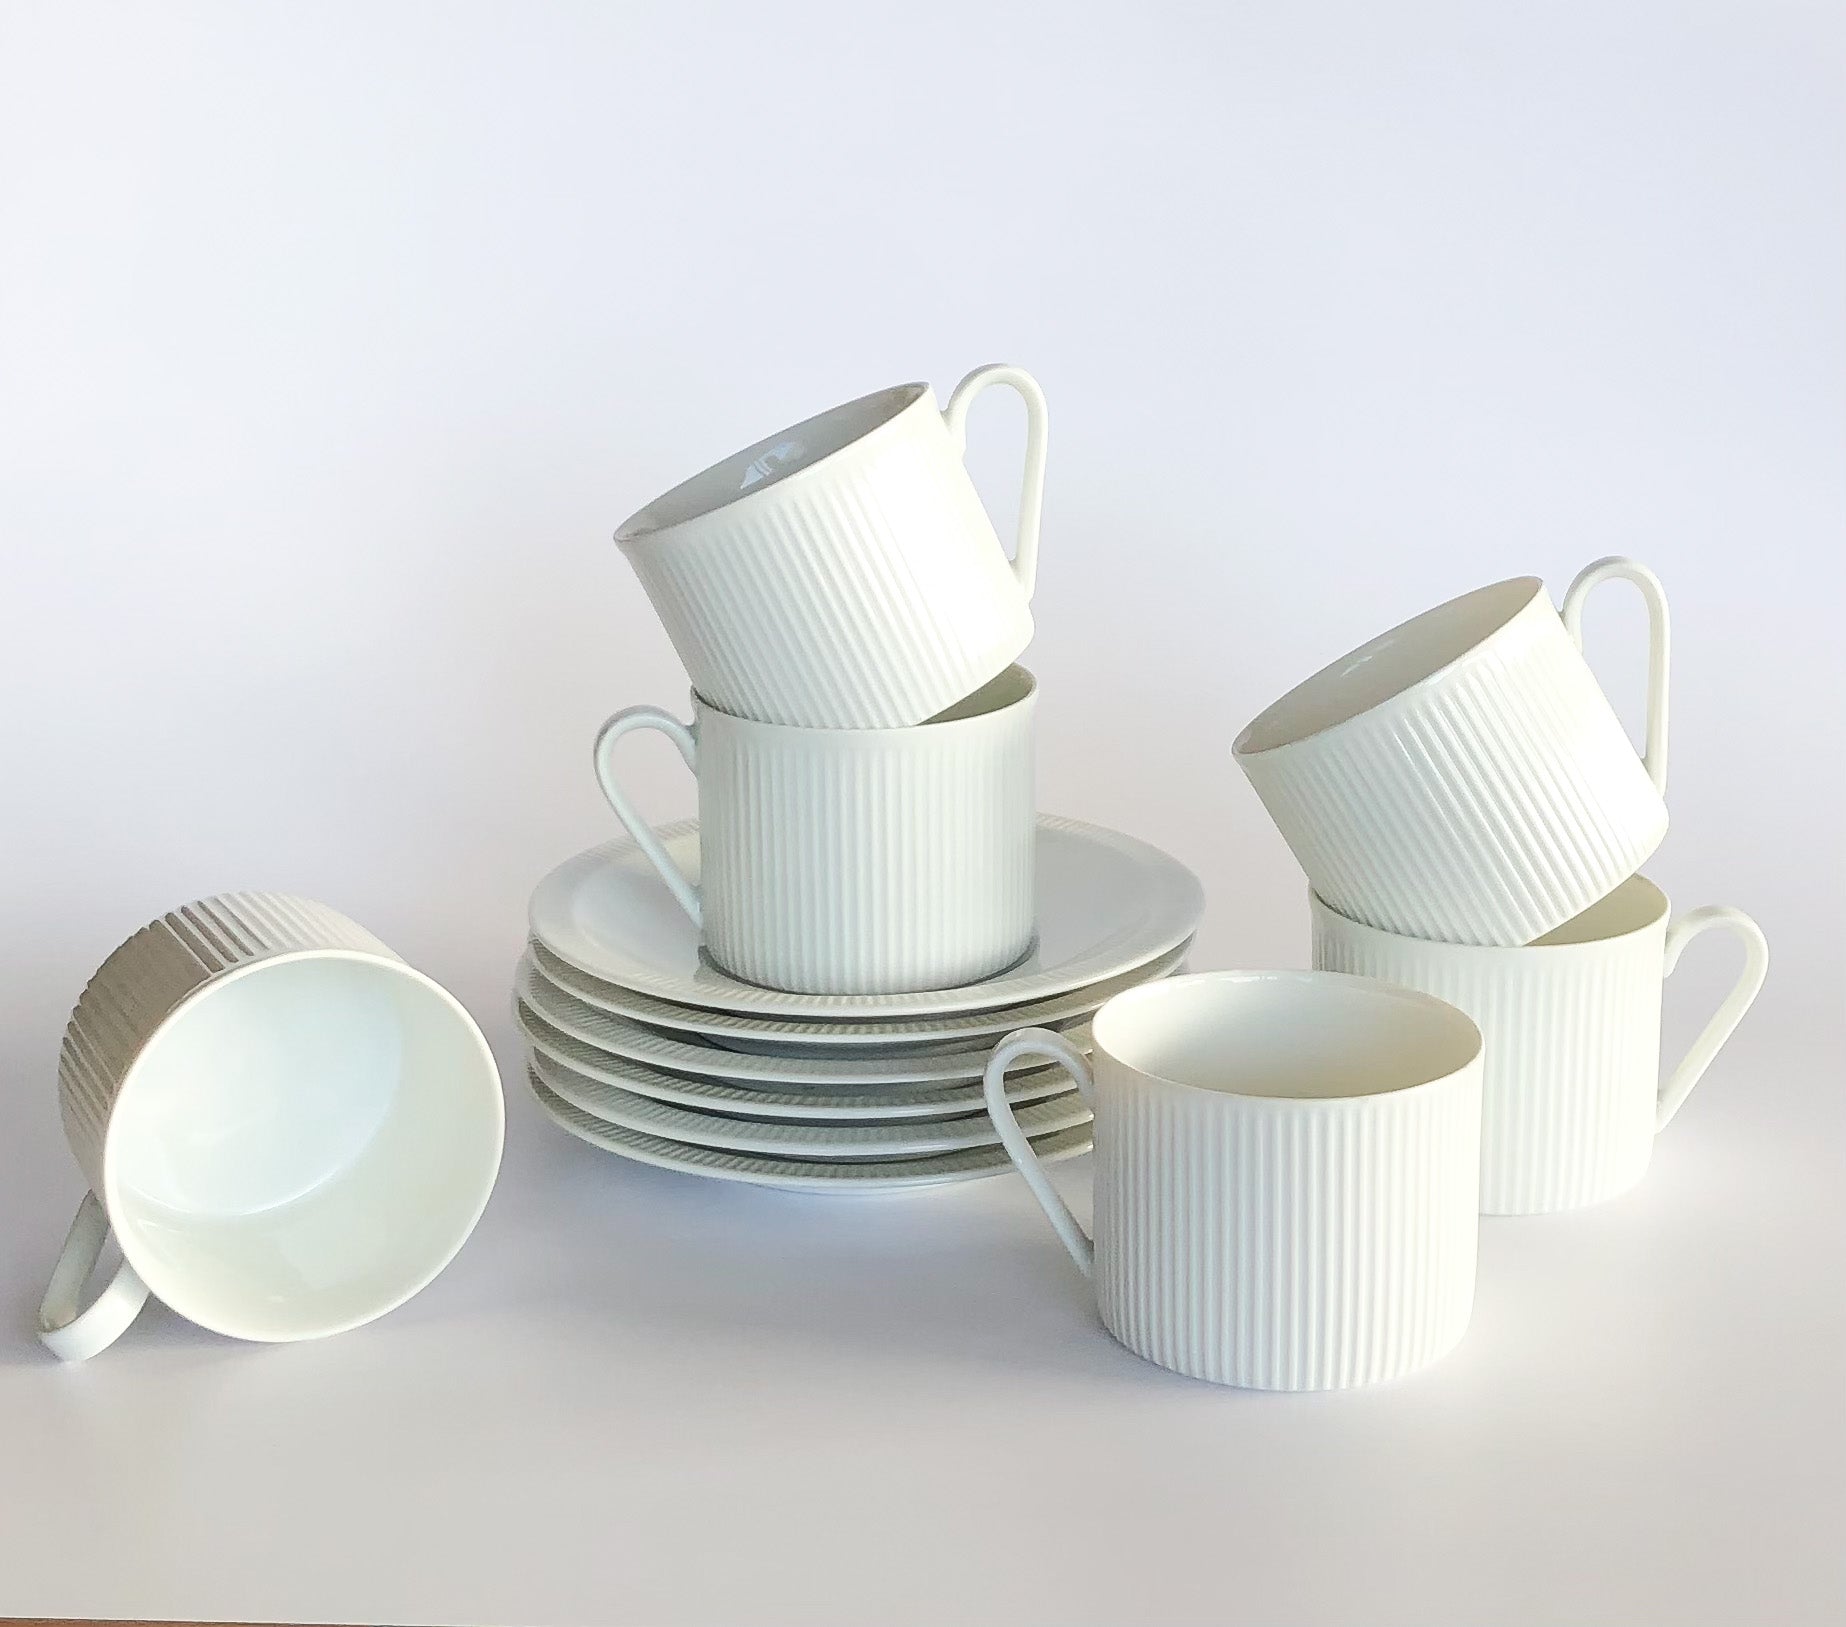 Arzberg Form 2000 White Mug  Mugs, White porcelain, Glassware